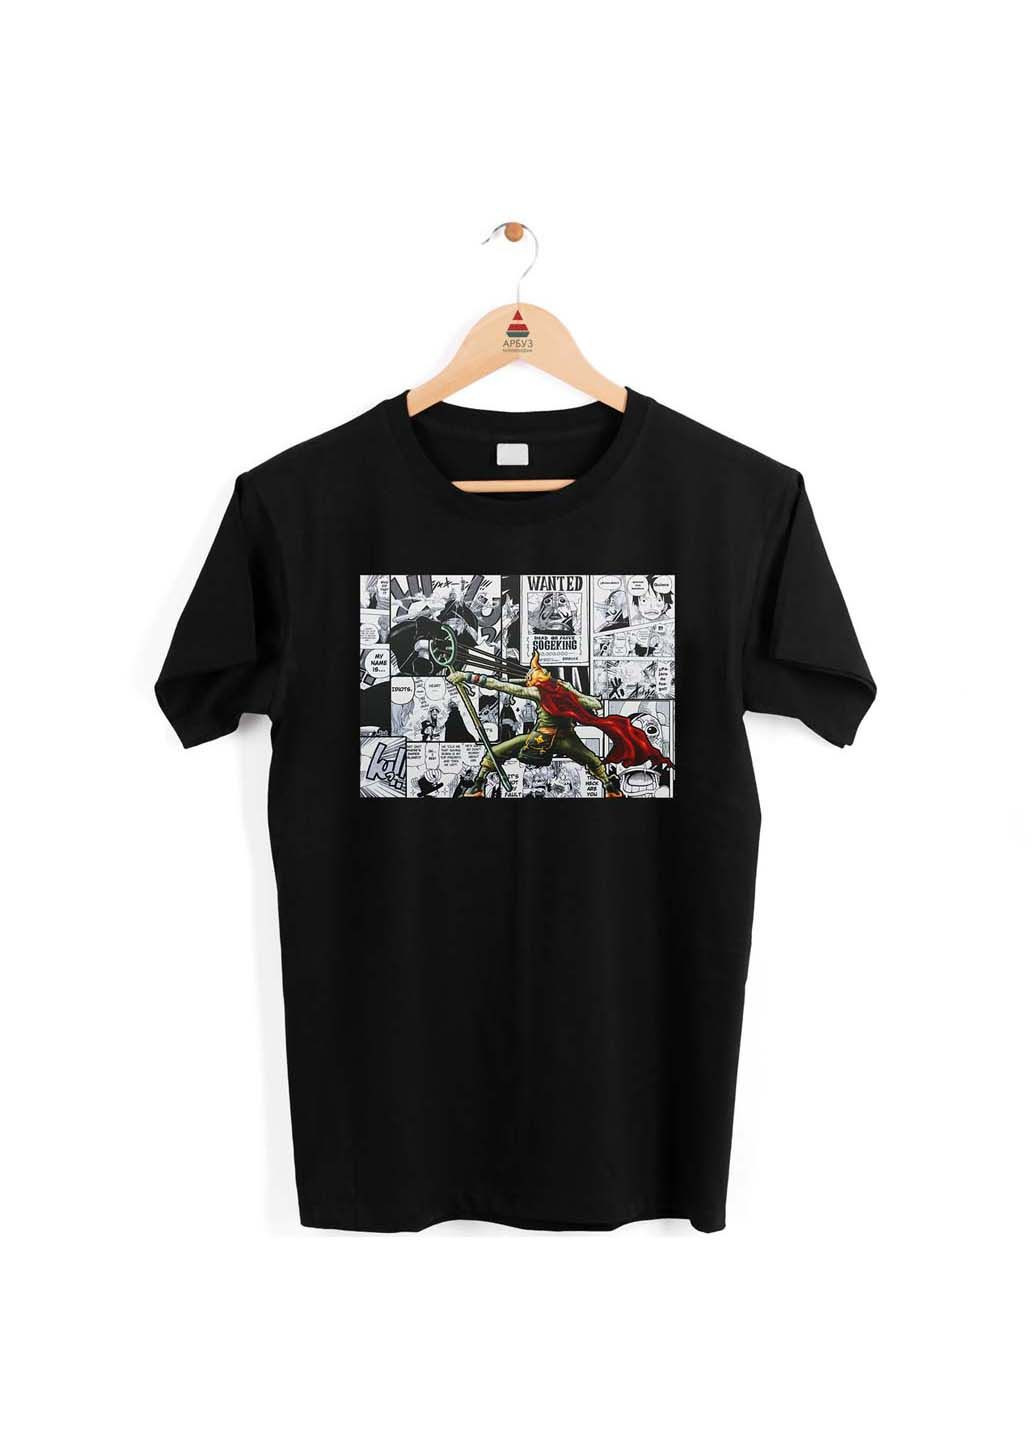 Черная футболка one piece ван-пис sogeking согекинг комикс Кавун